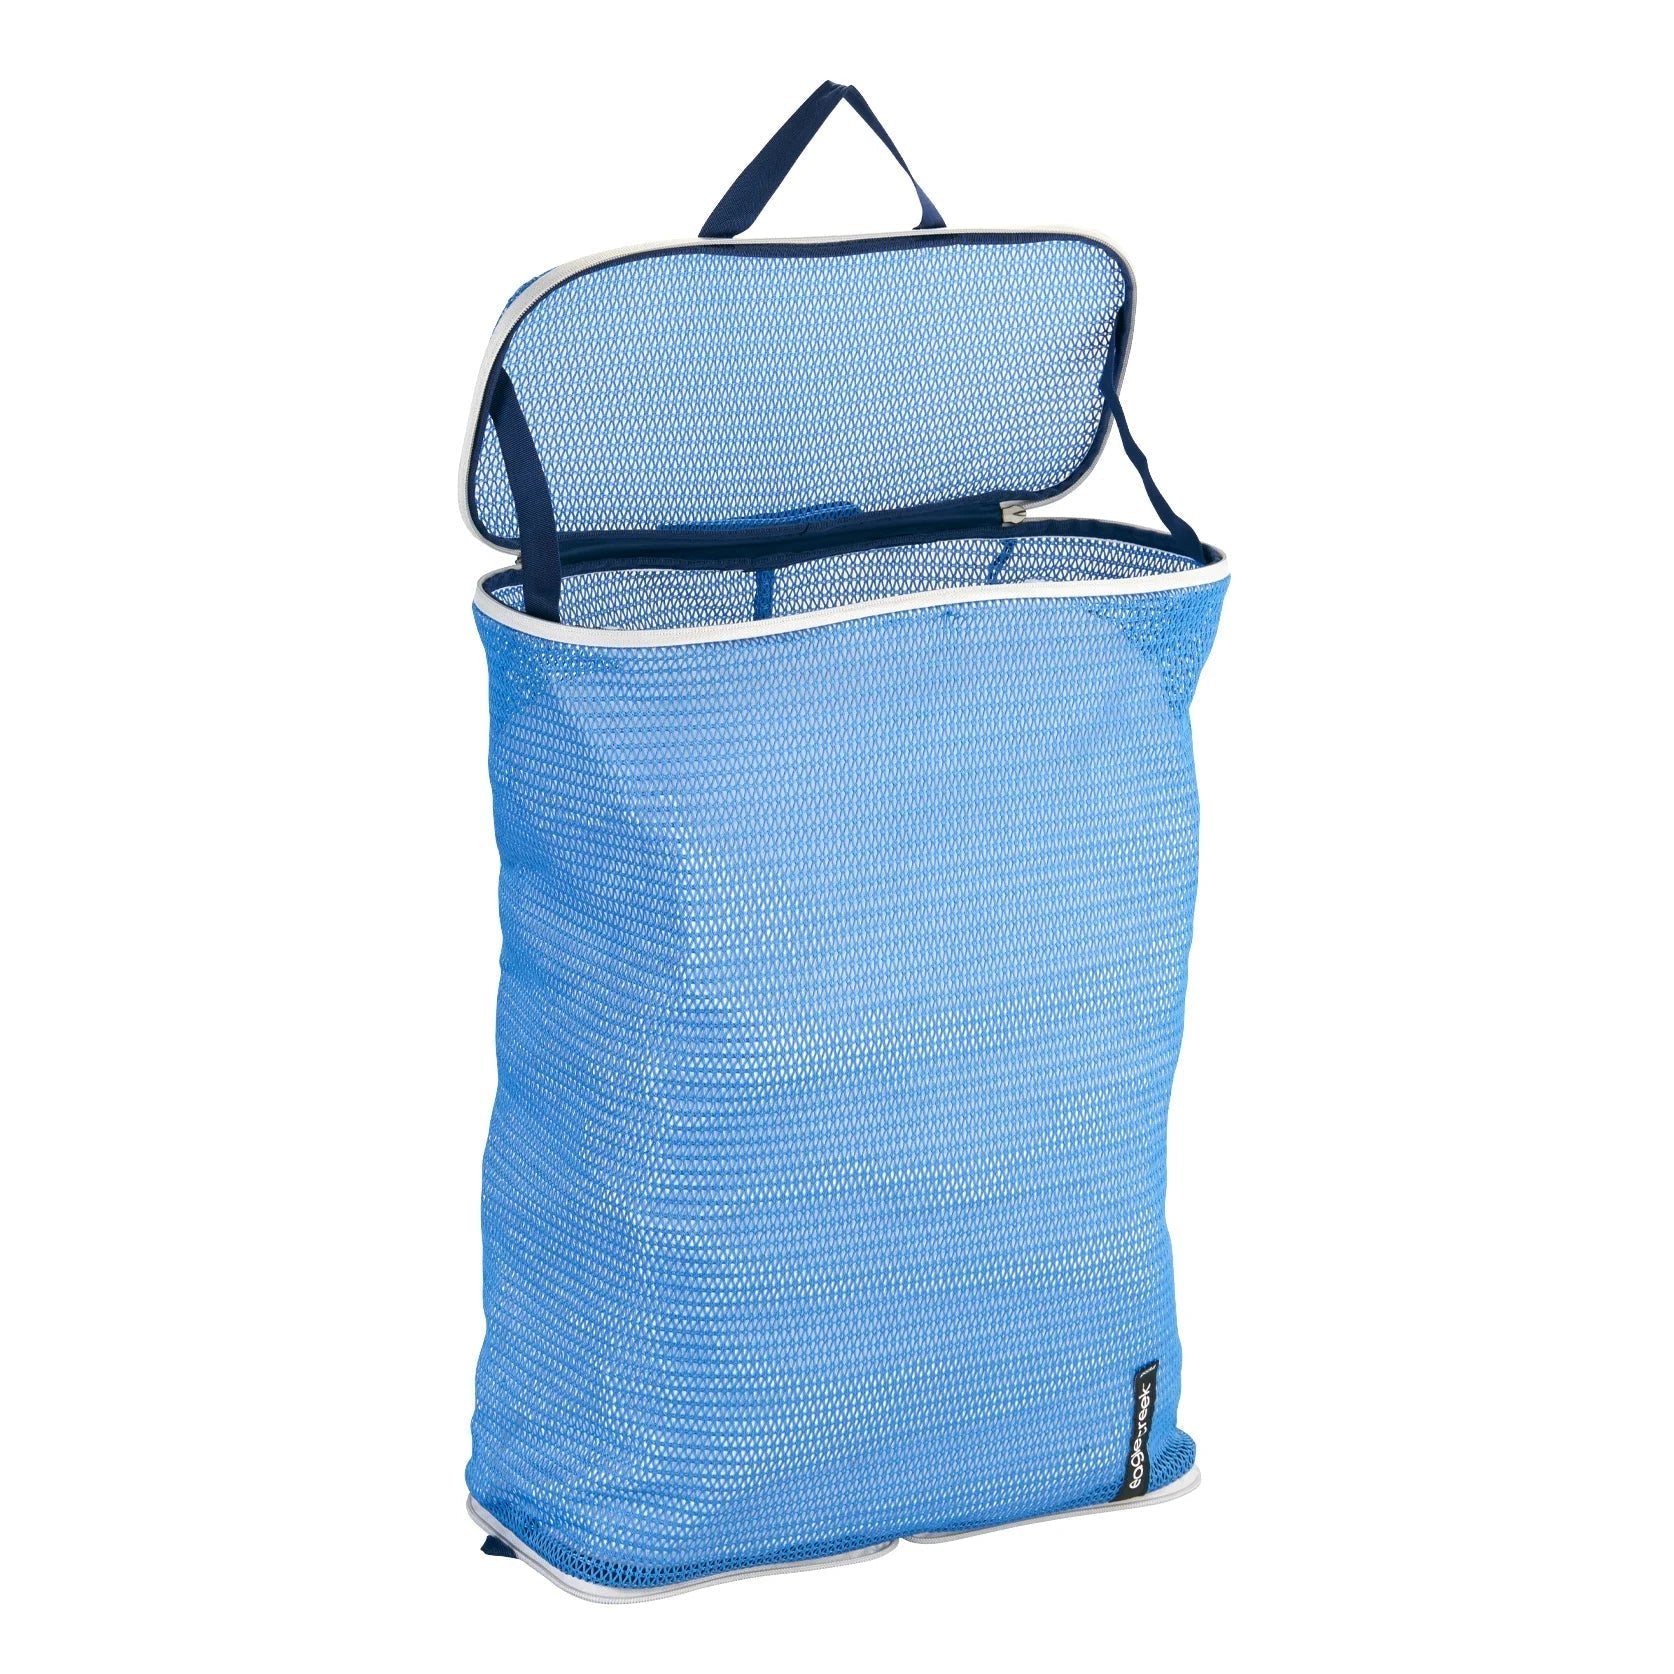 Eagle Creek Pack-It Reveal Laundry Bag 52 cm - az blue/grey